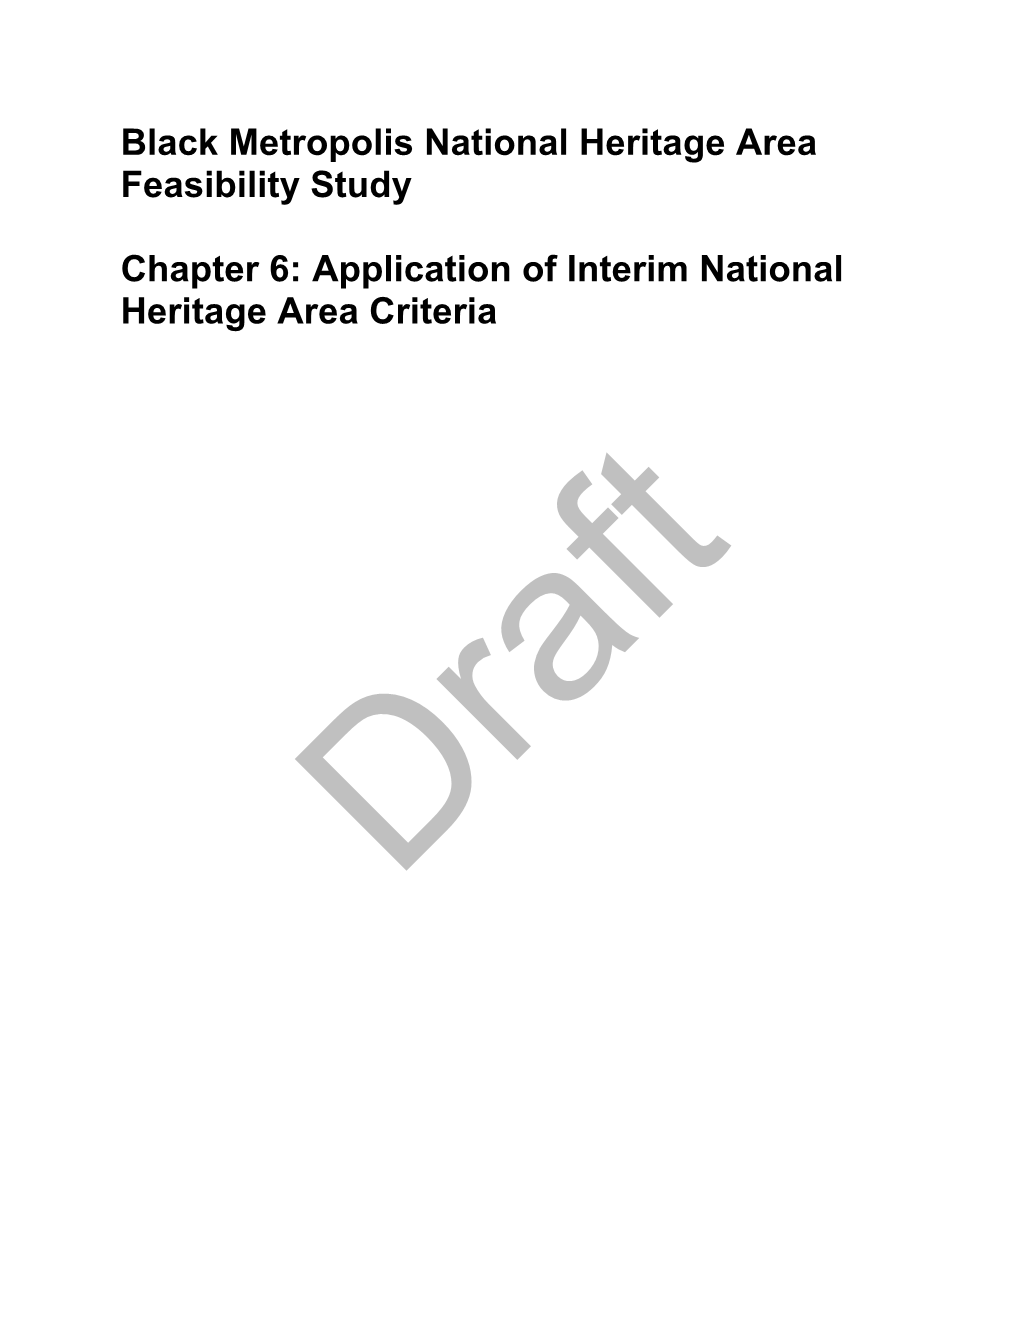 Application of Interim National Heritage Area Criteria